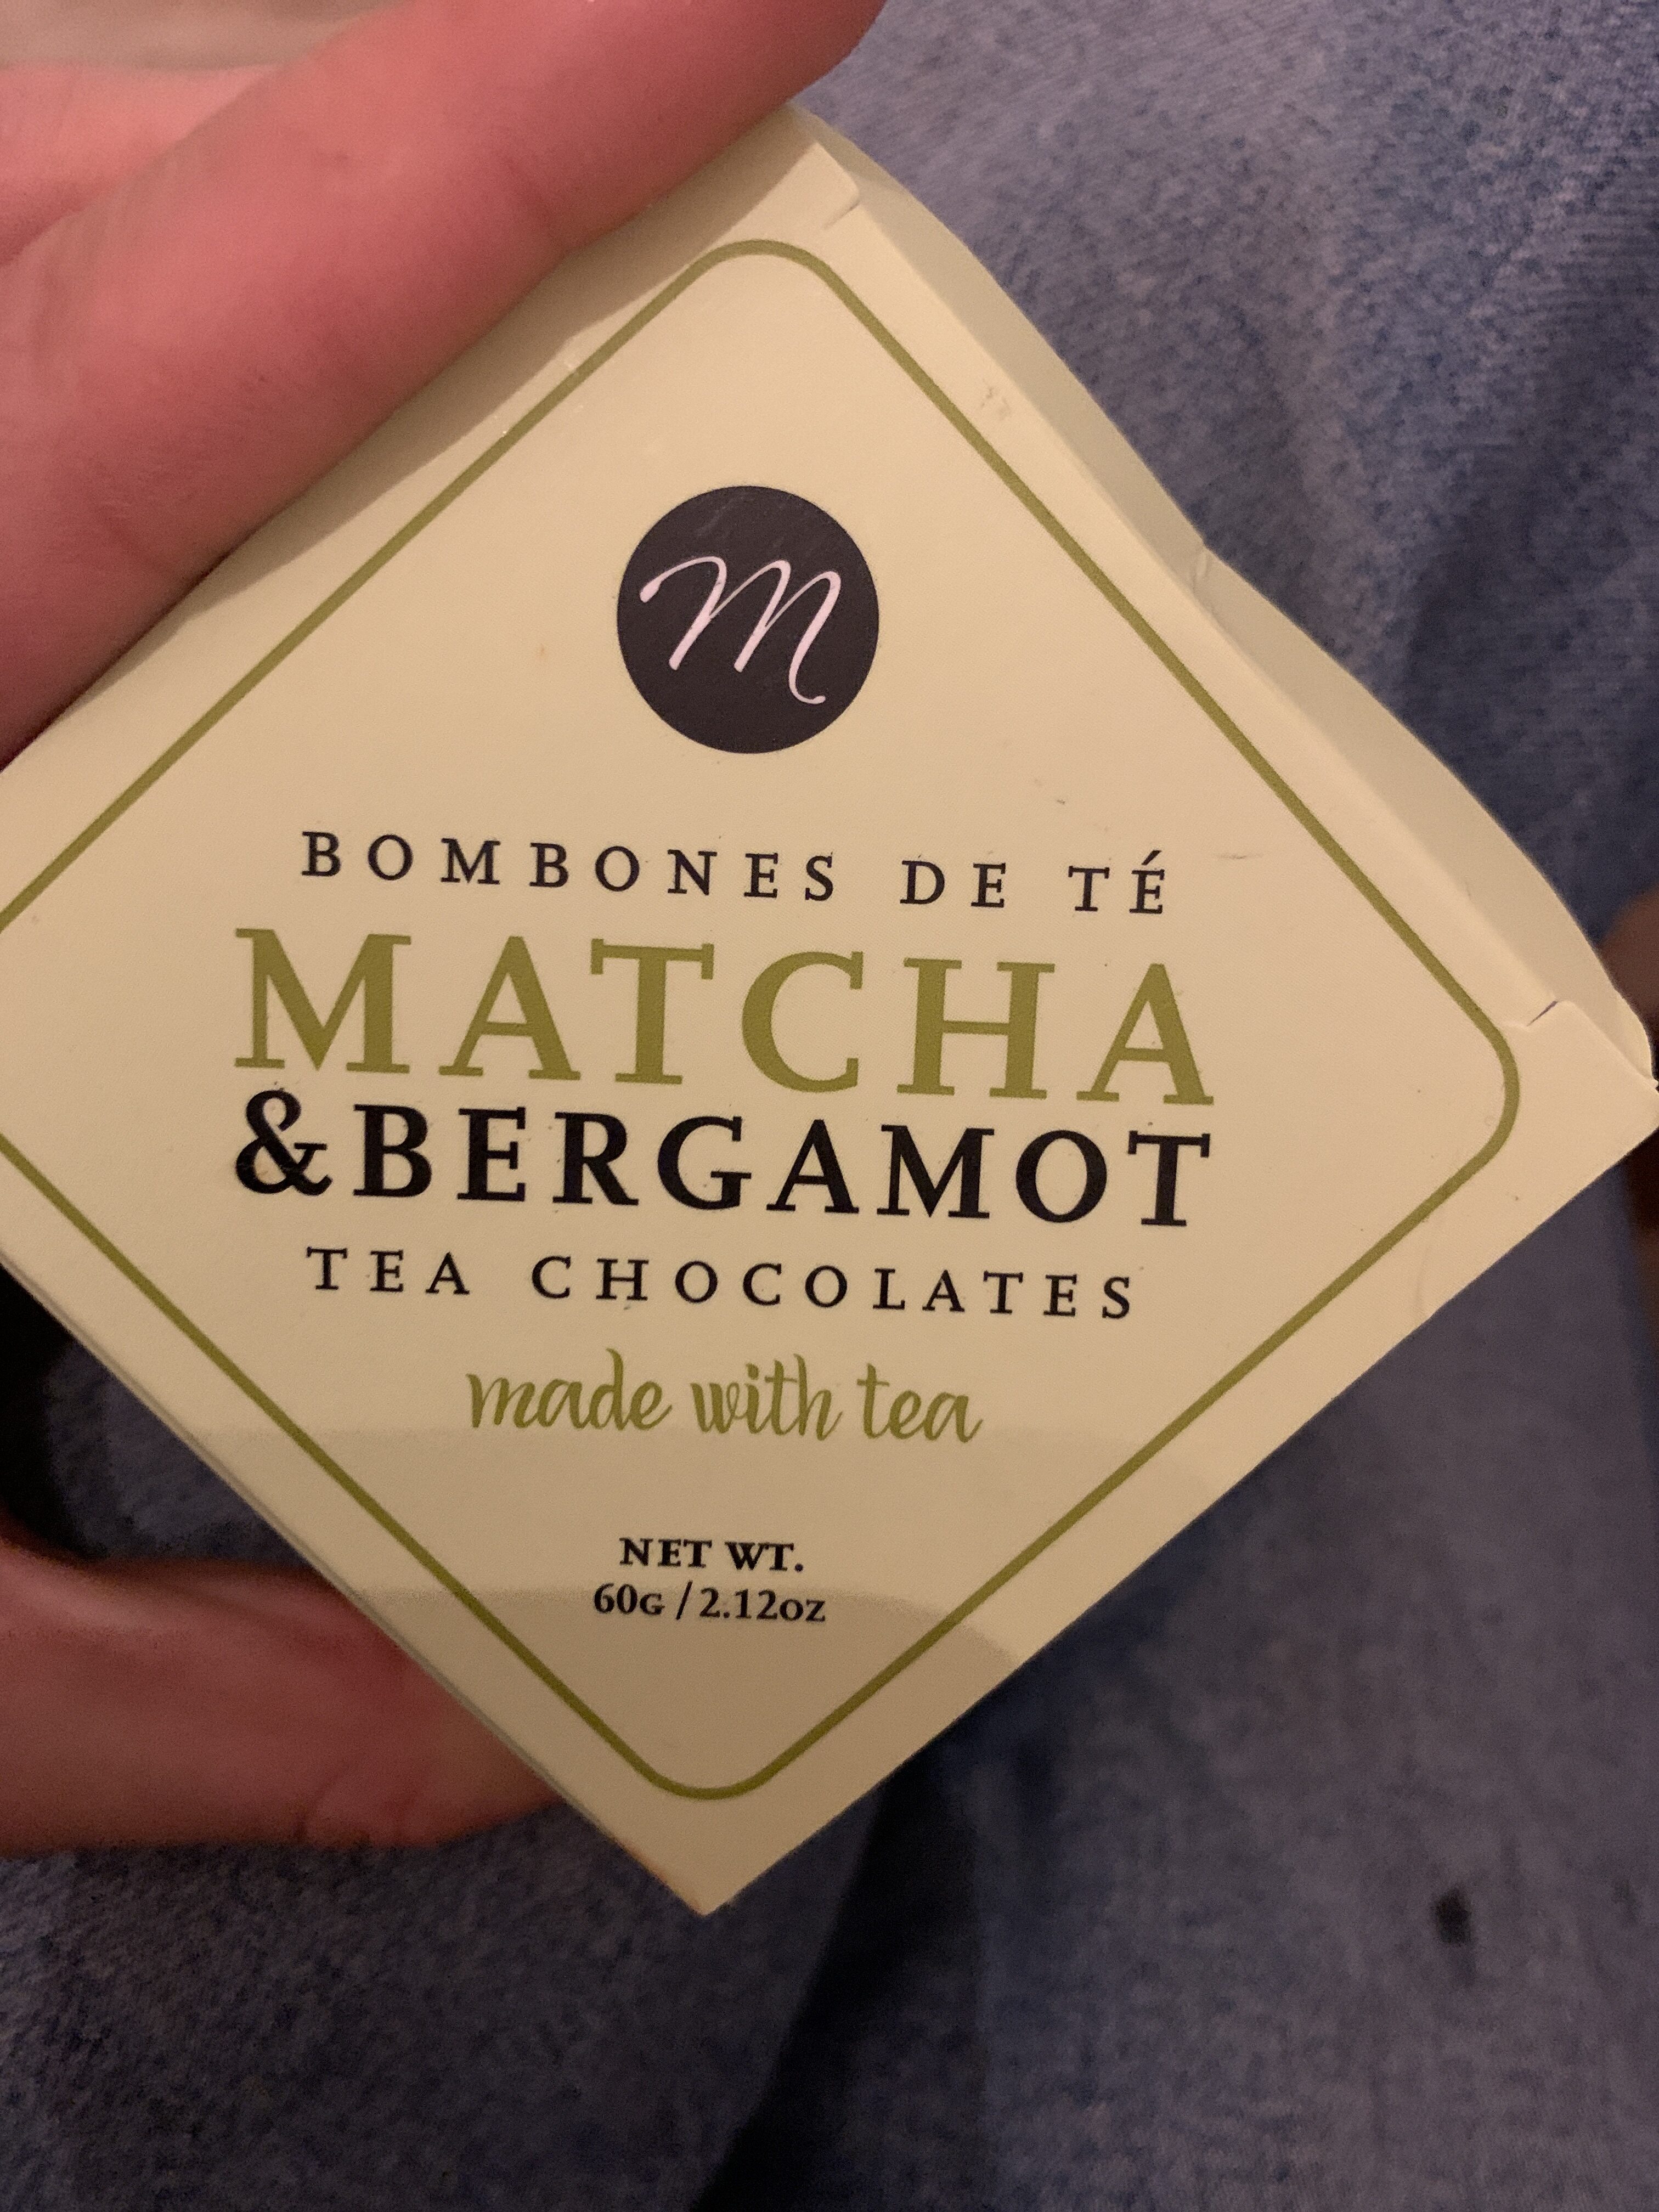 Bombones de té matcha & bergamot - Produit - es